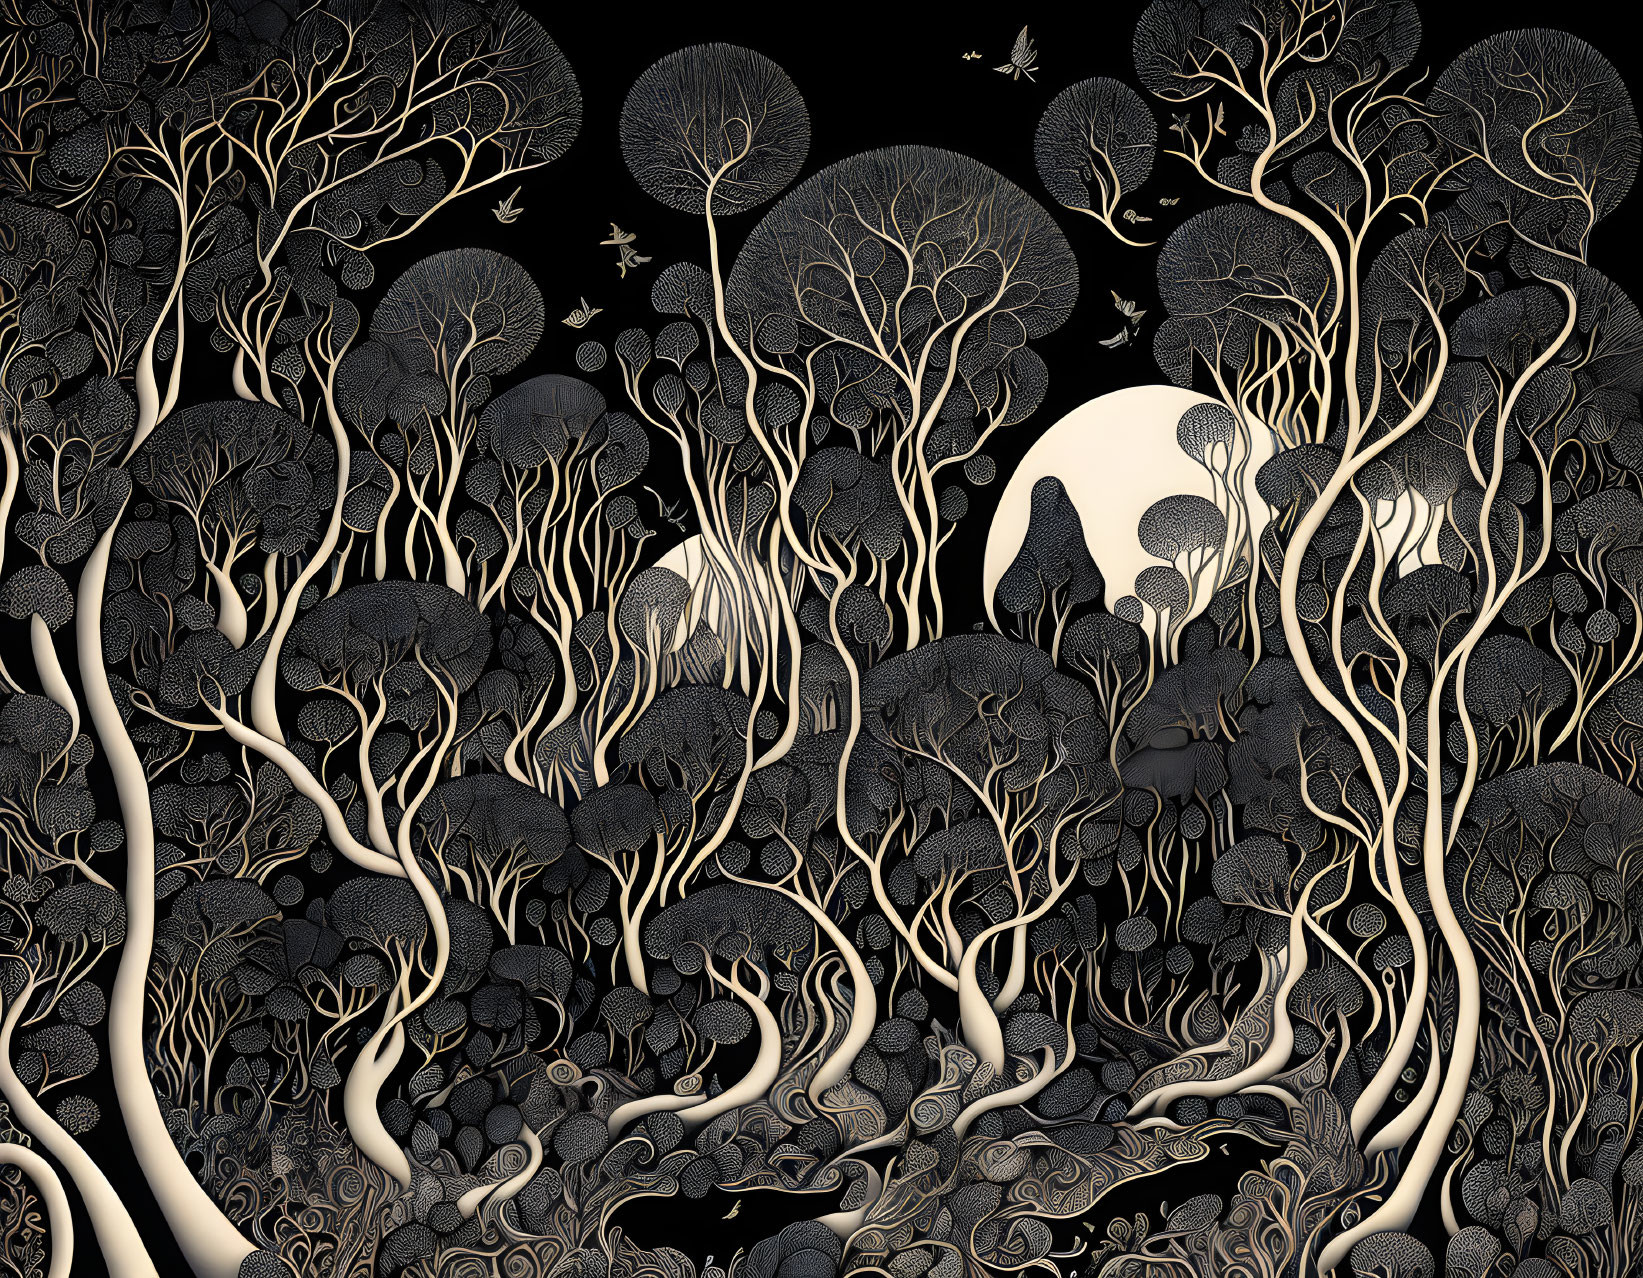 Fantasy black biomorphic forest scene.